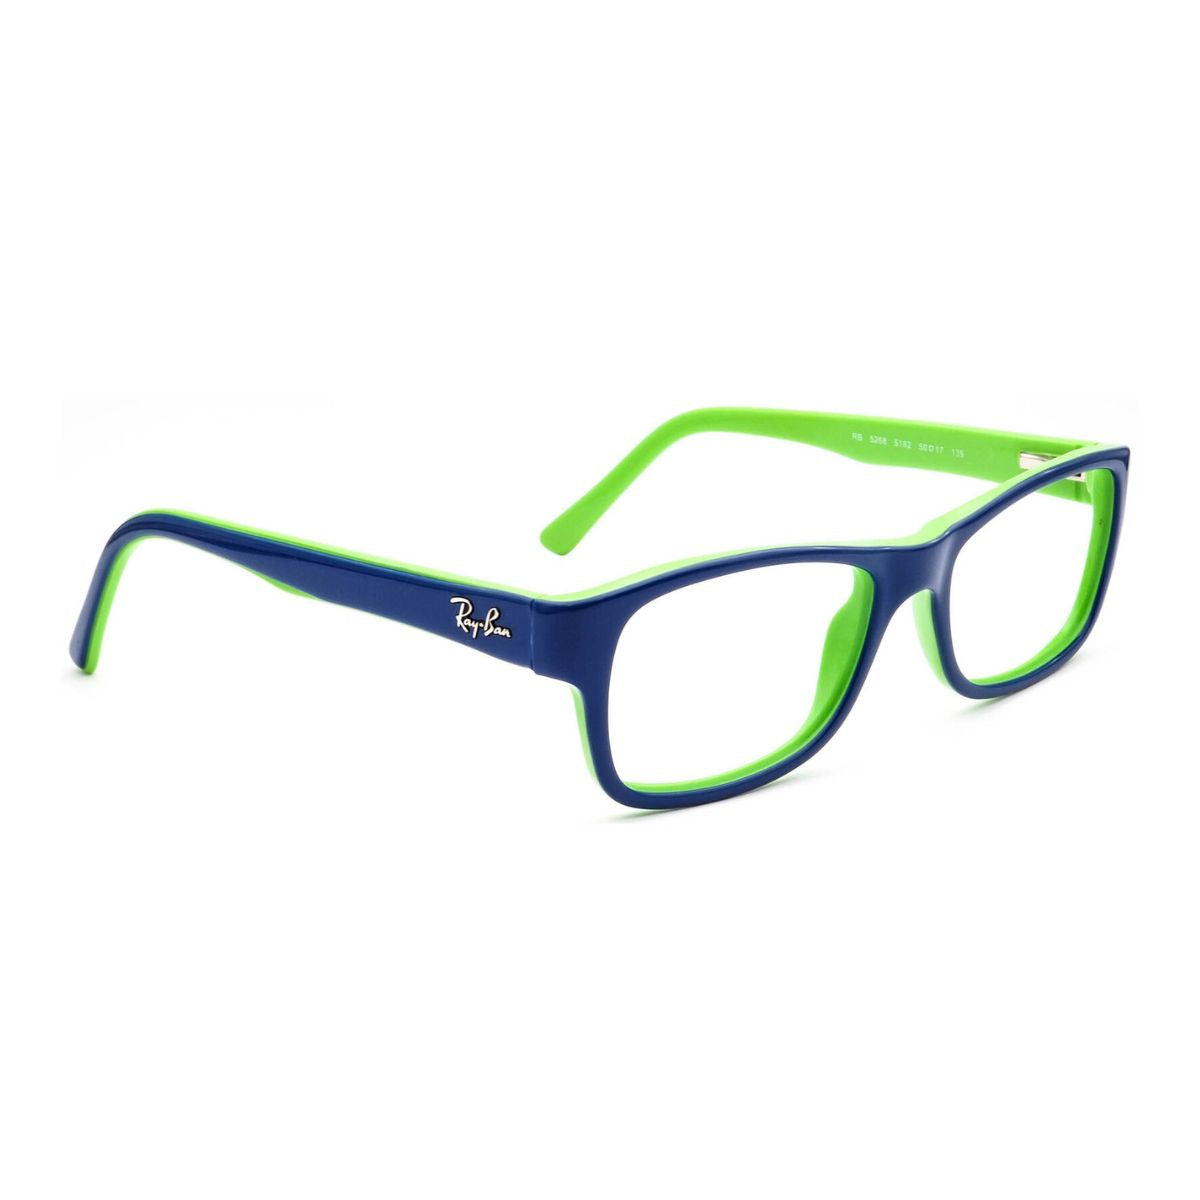 "best Rayban 5268 5182 eyeglass frames for men's and women's at optorium